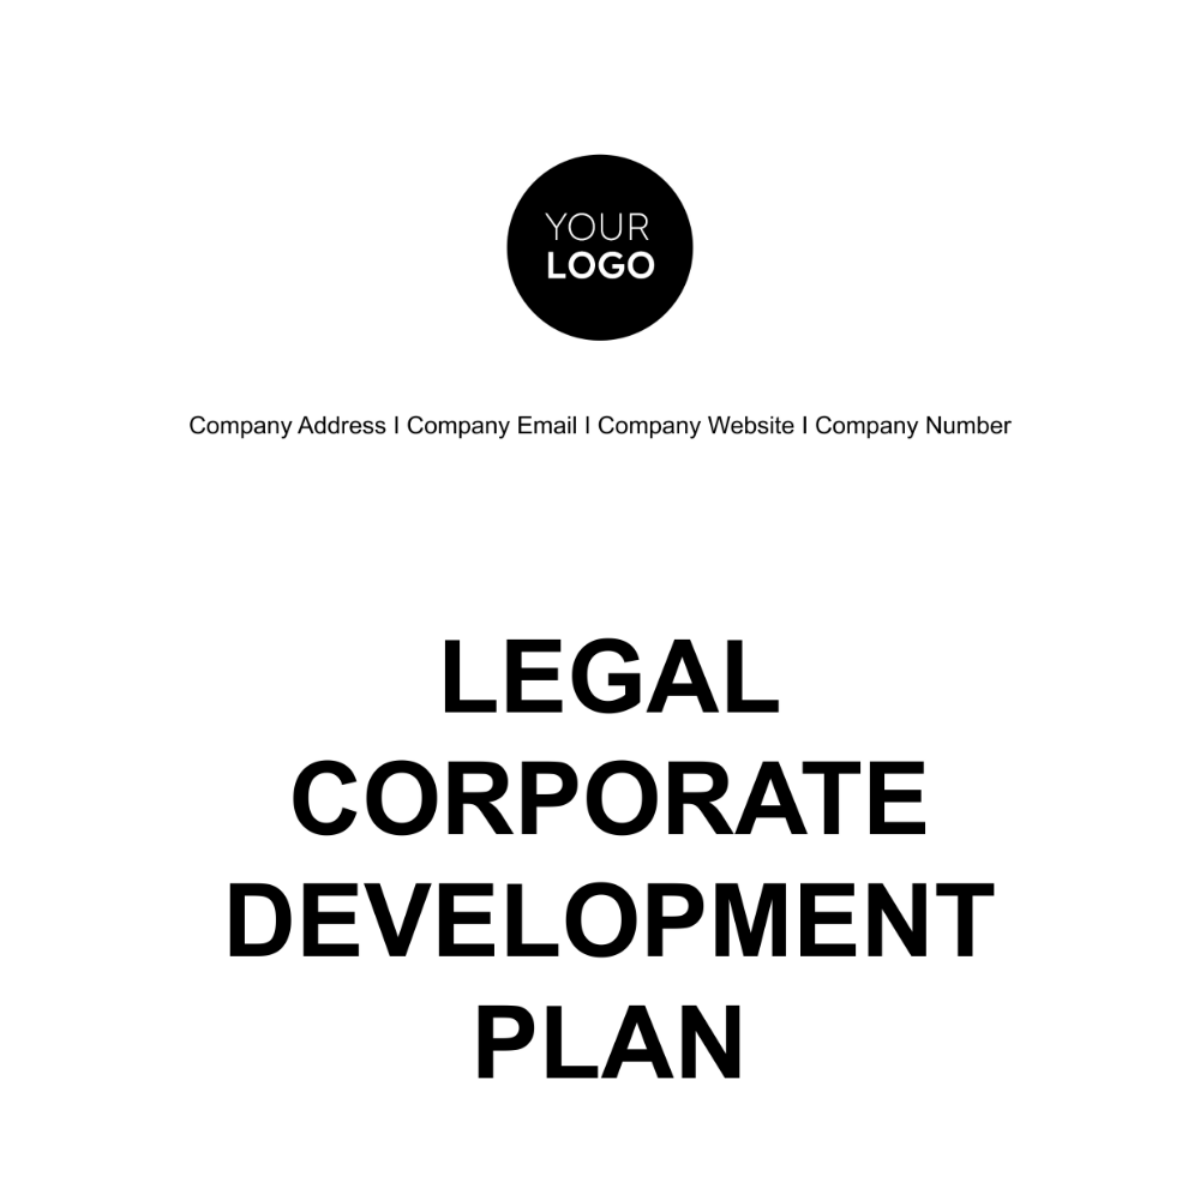 Legal Corporate Development Plan Template